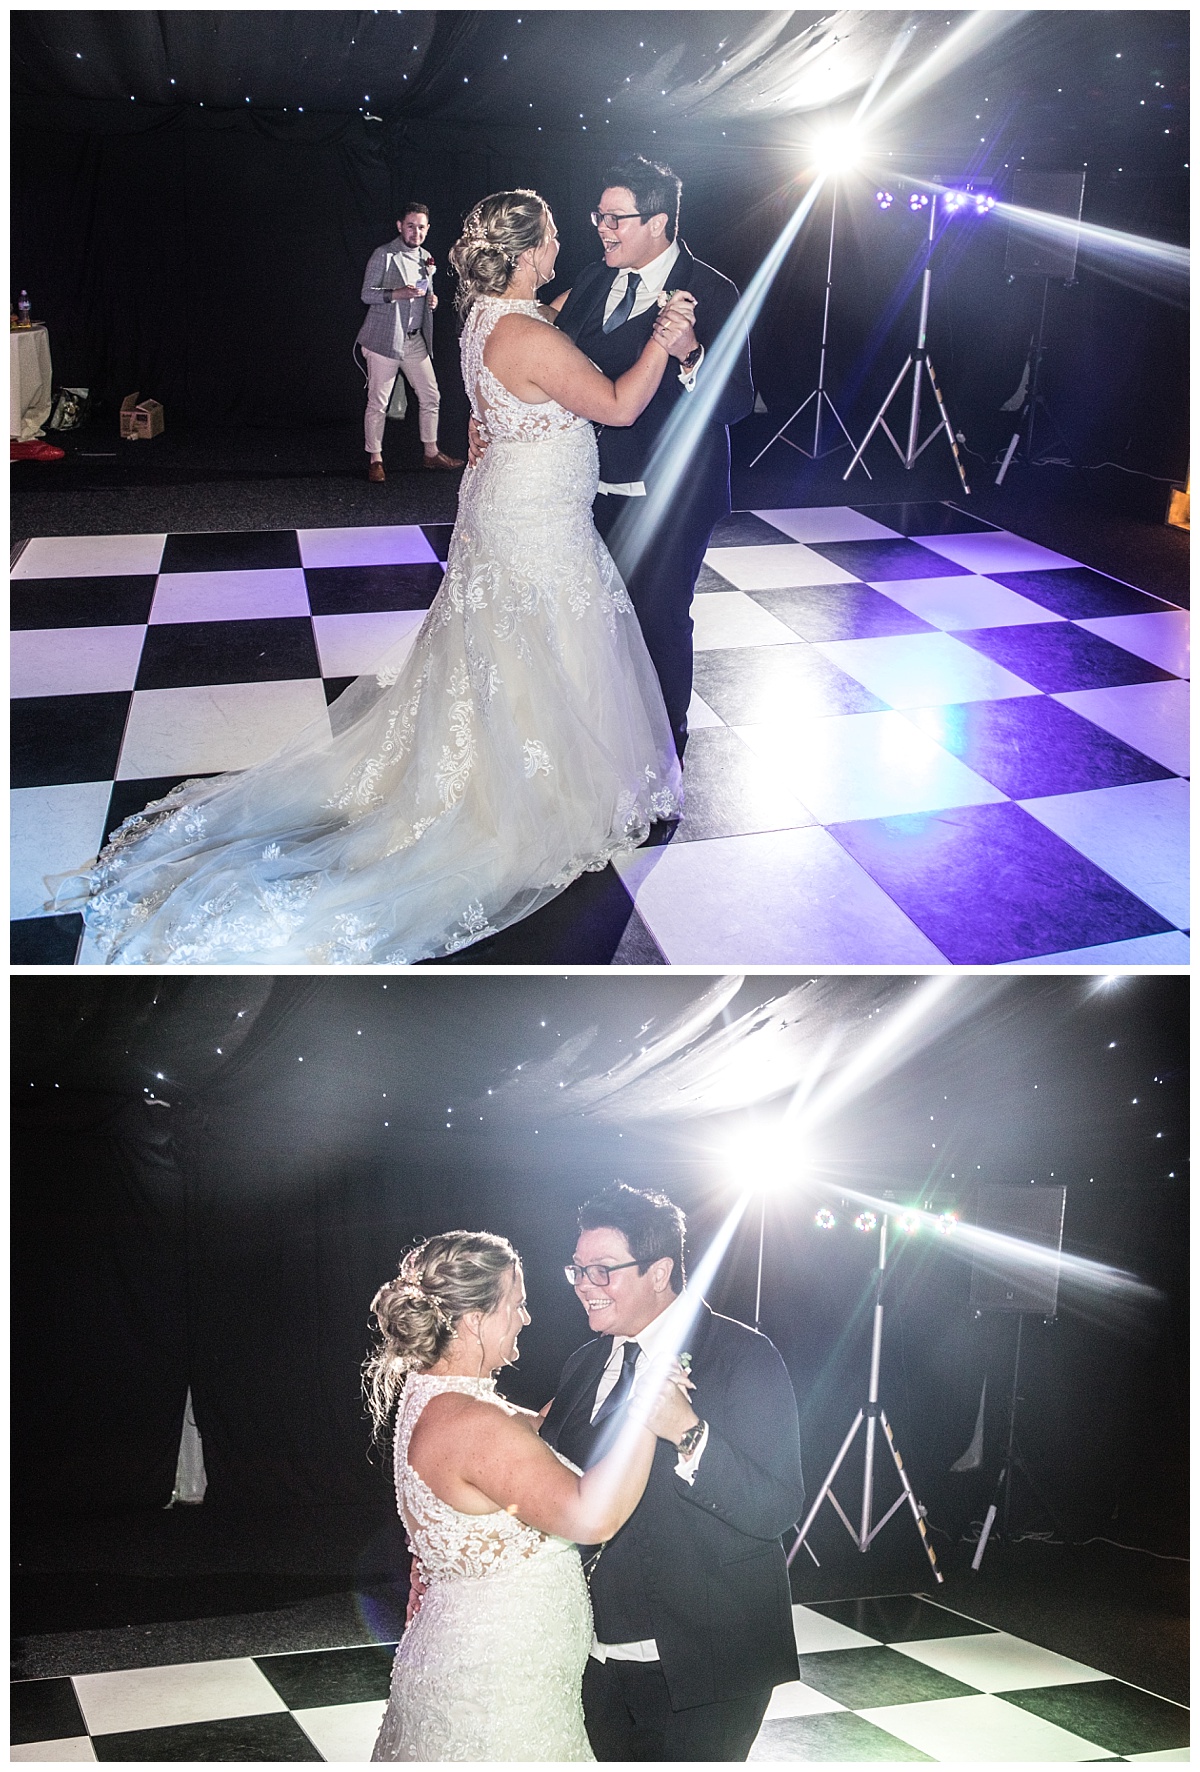 Wedding Photography Manchester - Nicky and Nichola's Nunsmere Hall Wedding Day 125